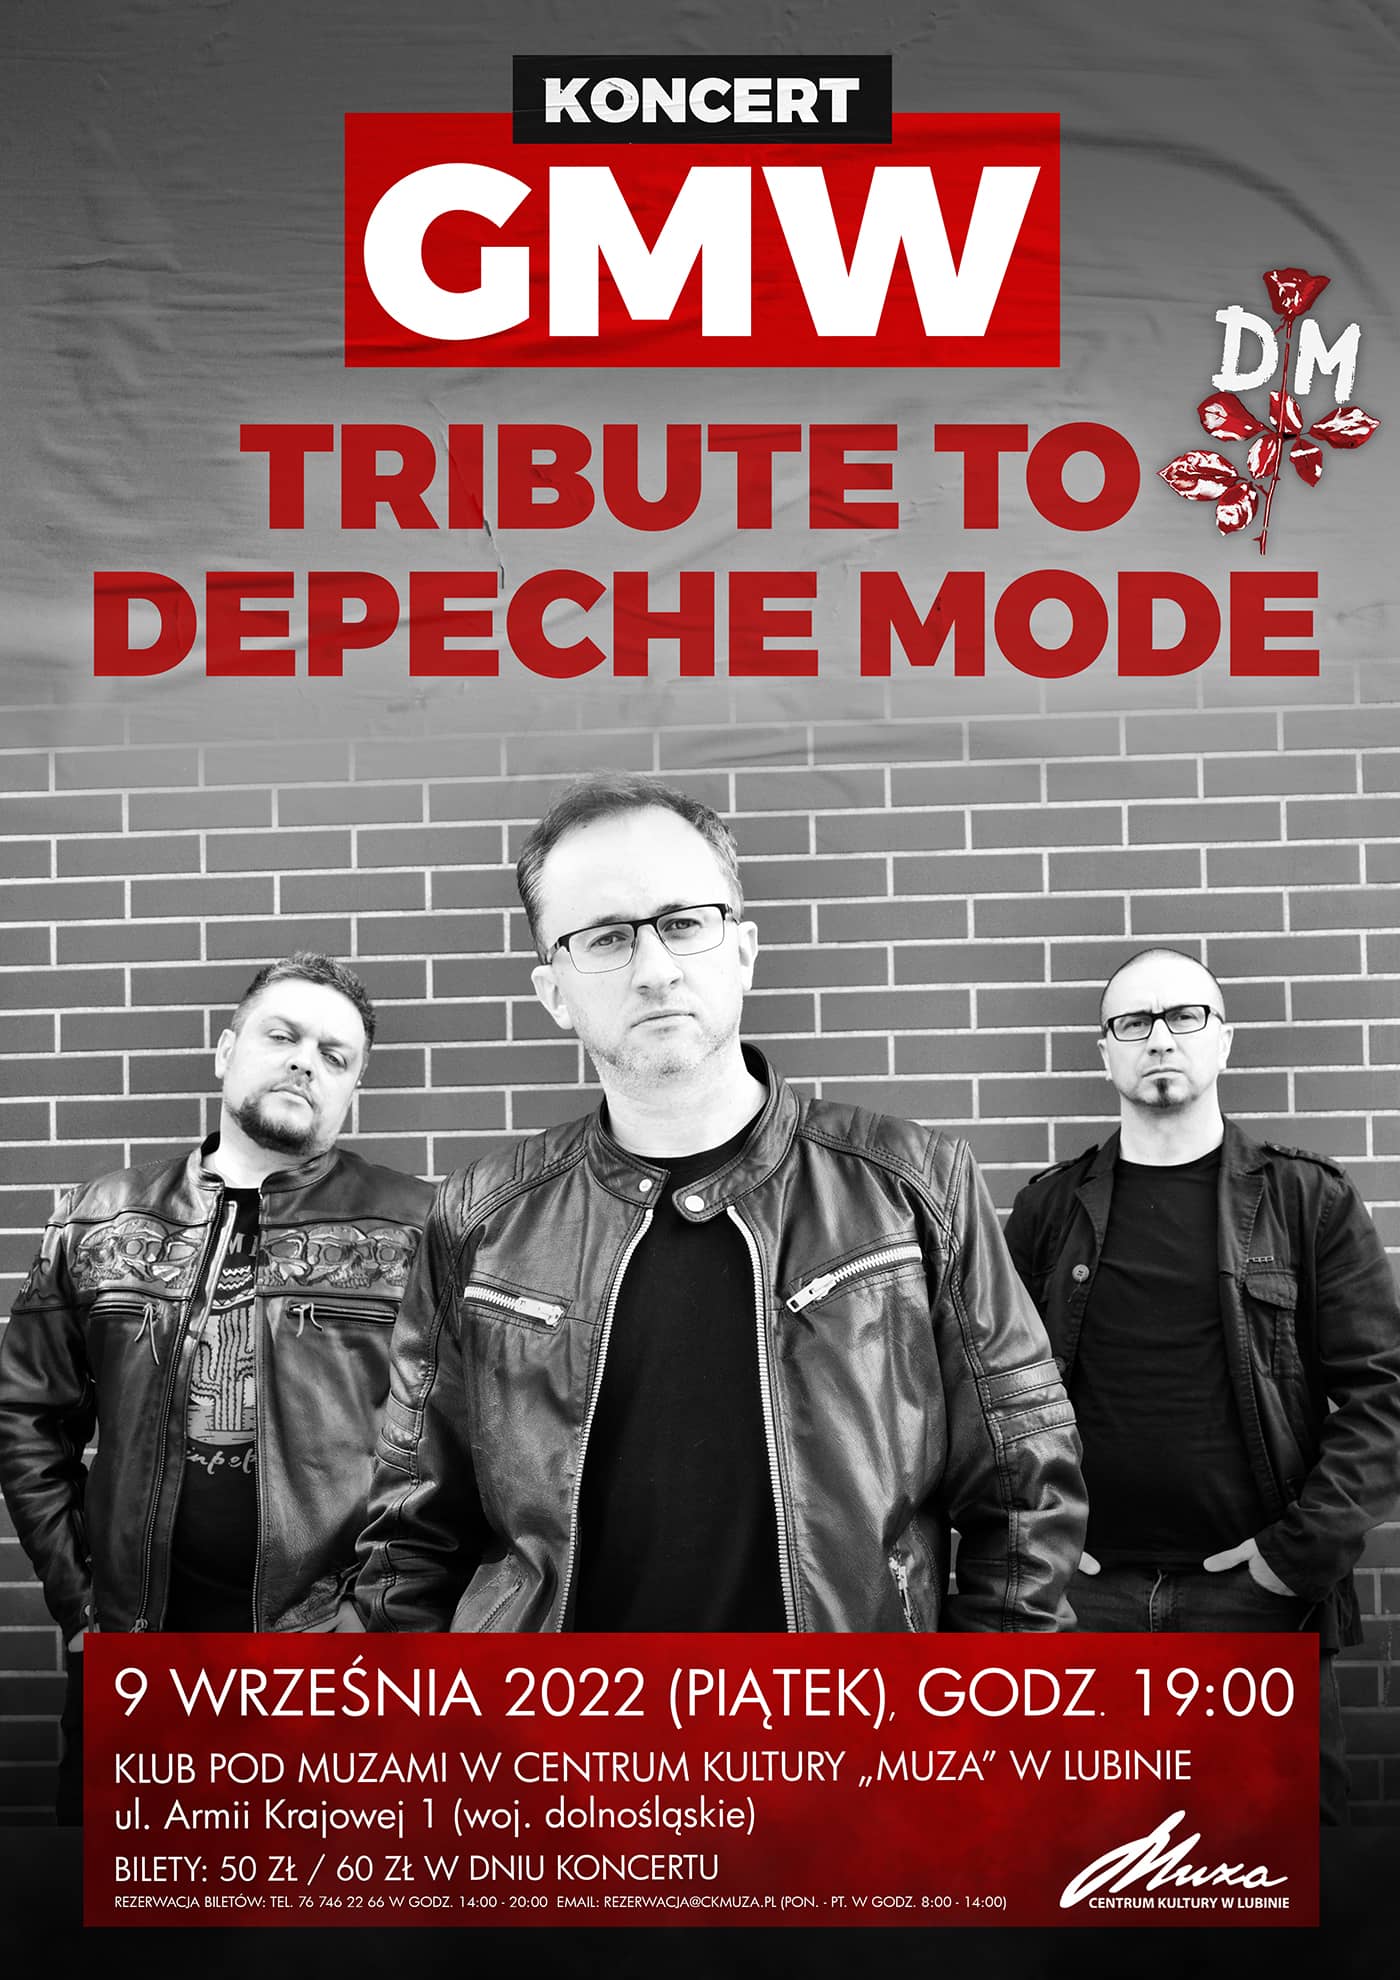 Repertuar Depeche Mode w Klubie pod Muzami